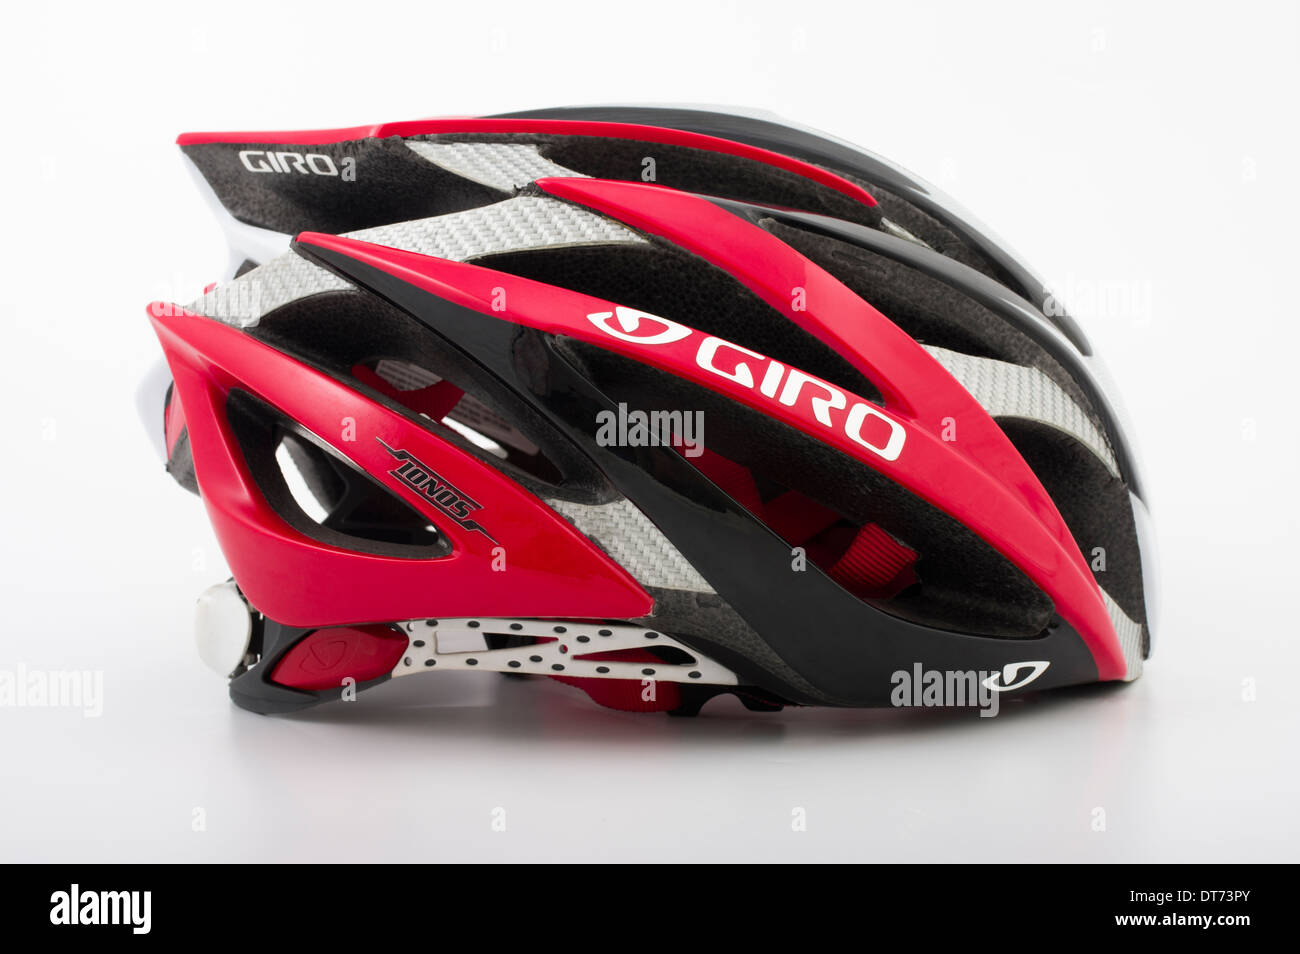 Giro Ionos lightweight road cycling / triathlon helmet Stock Photo - Alamy